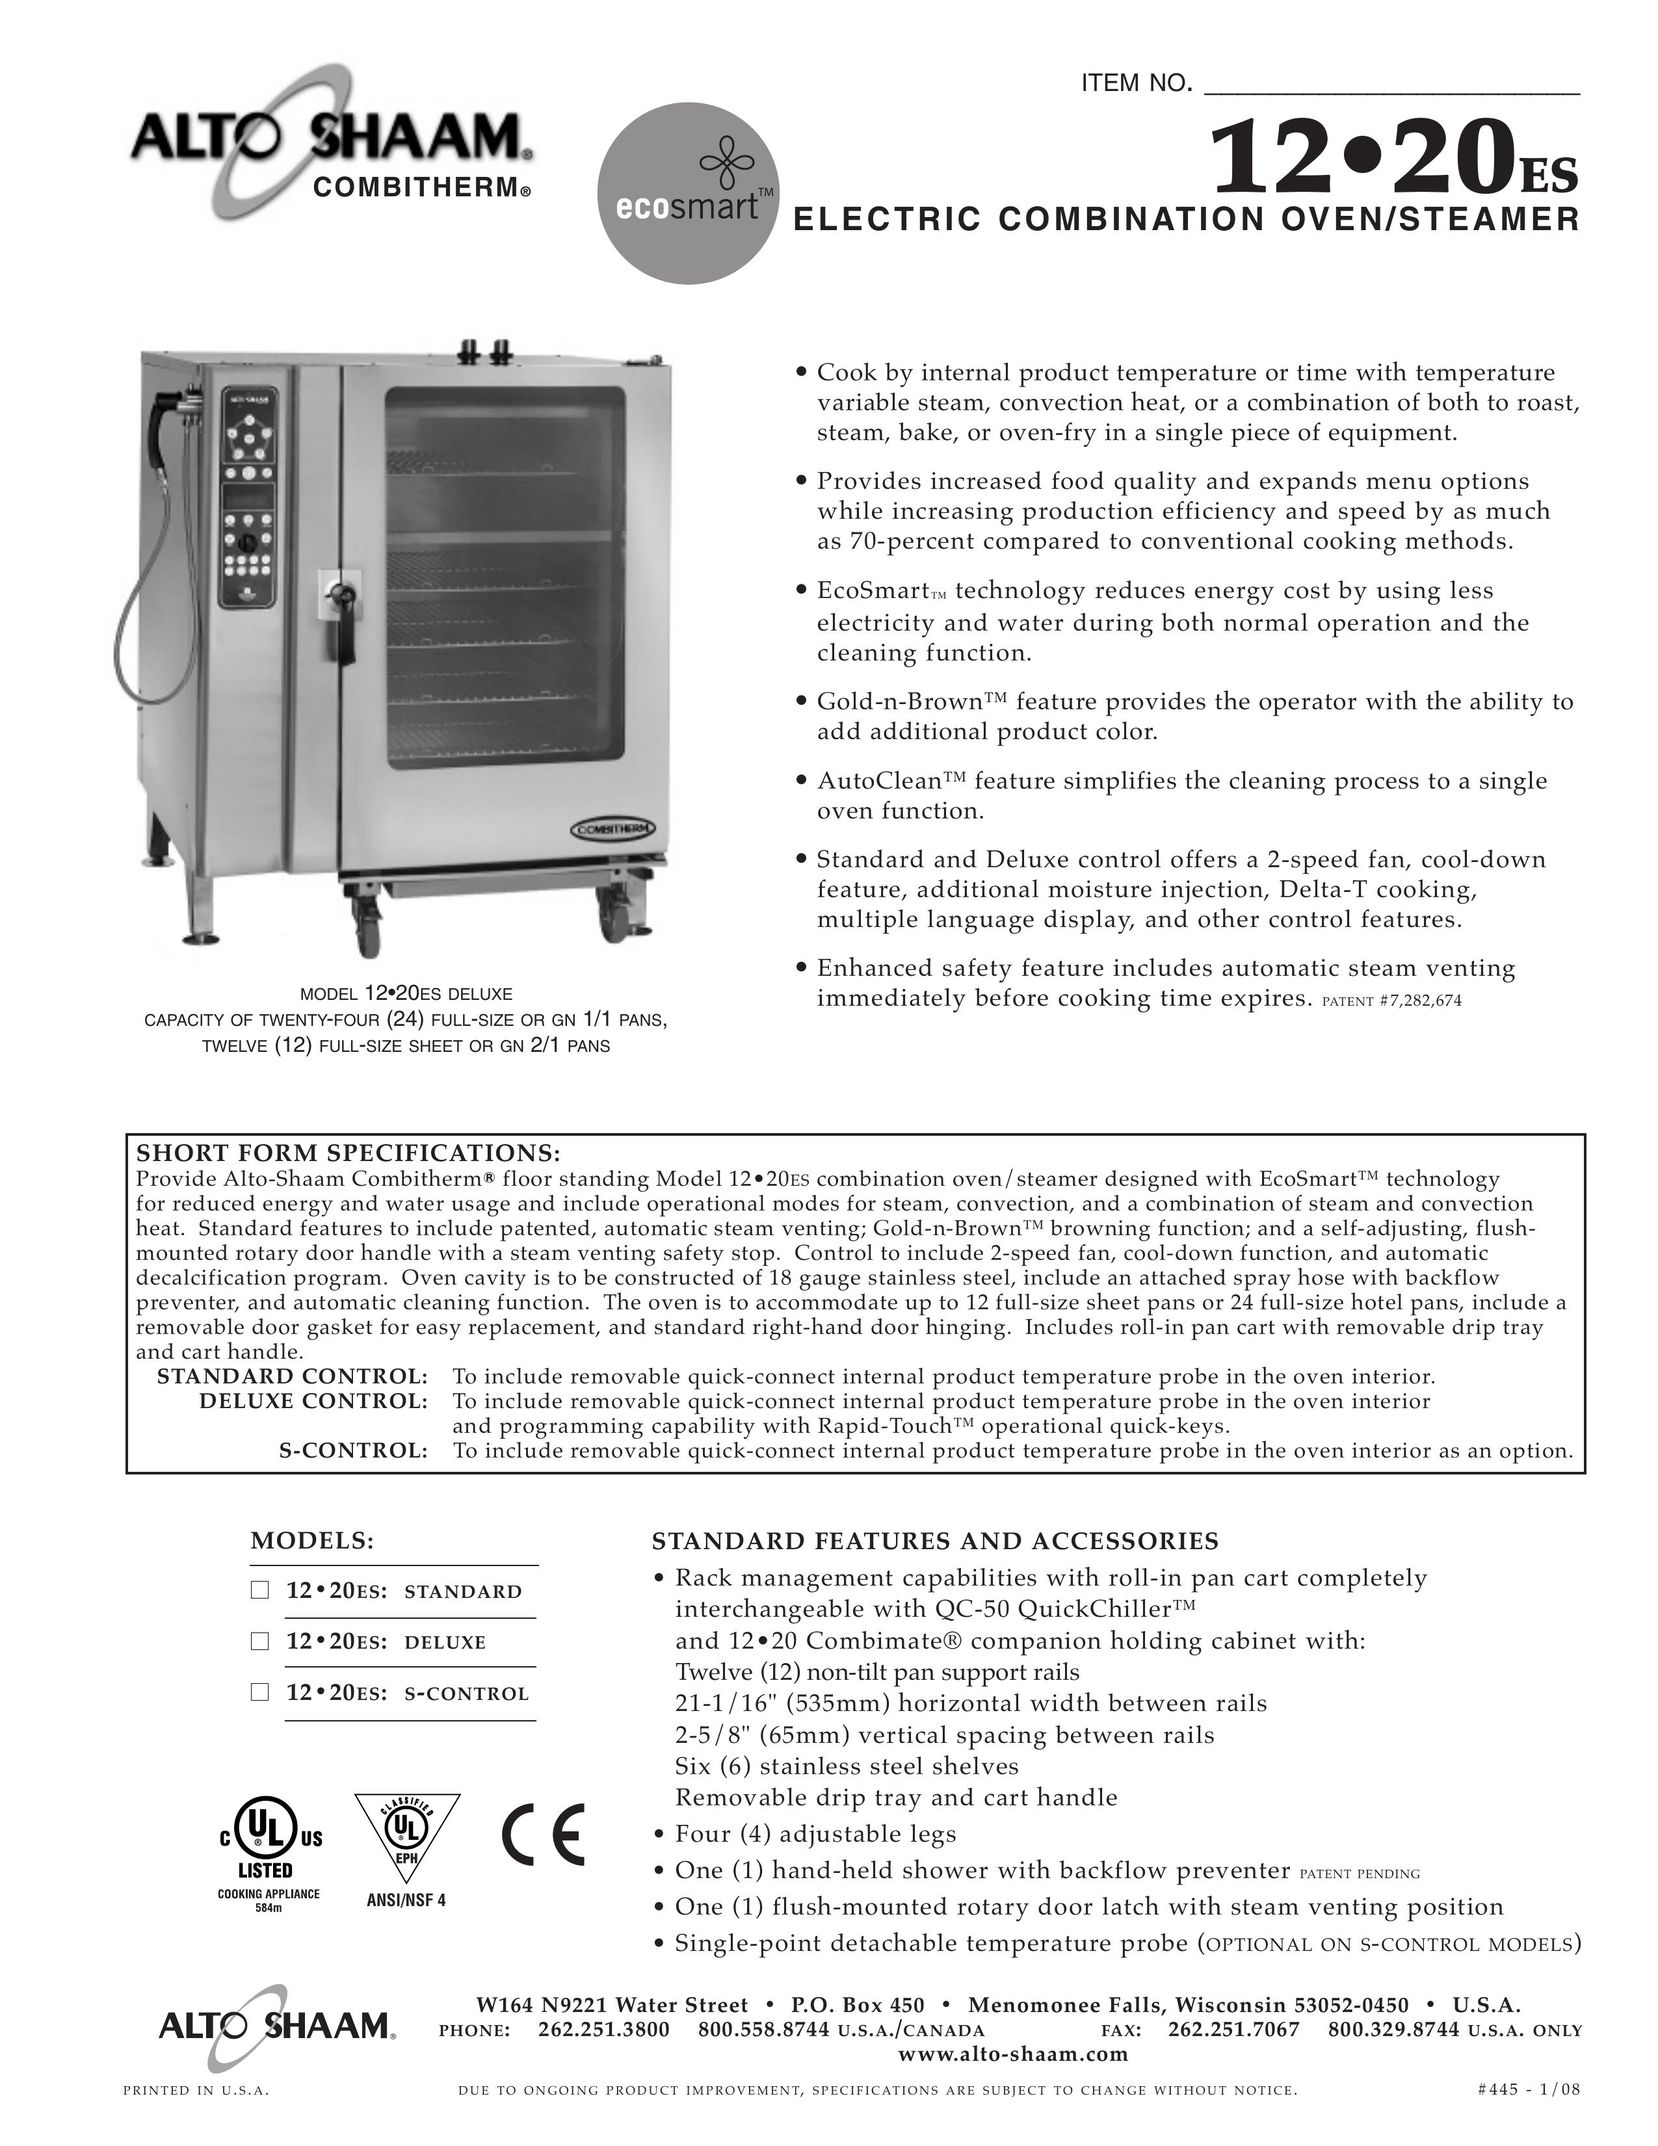 Alto-Shaam 12.20ES Oven User Manual